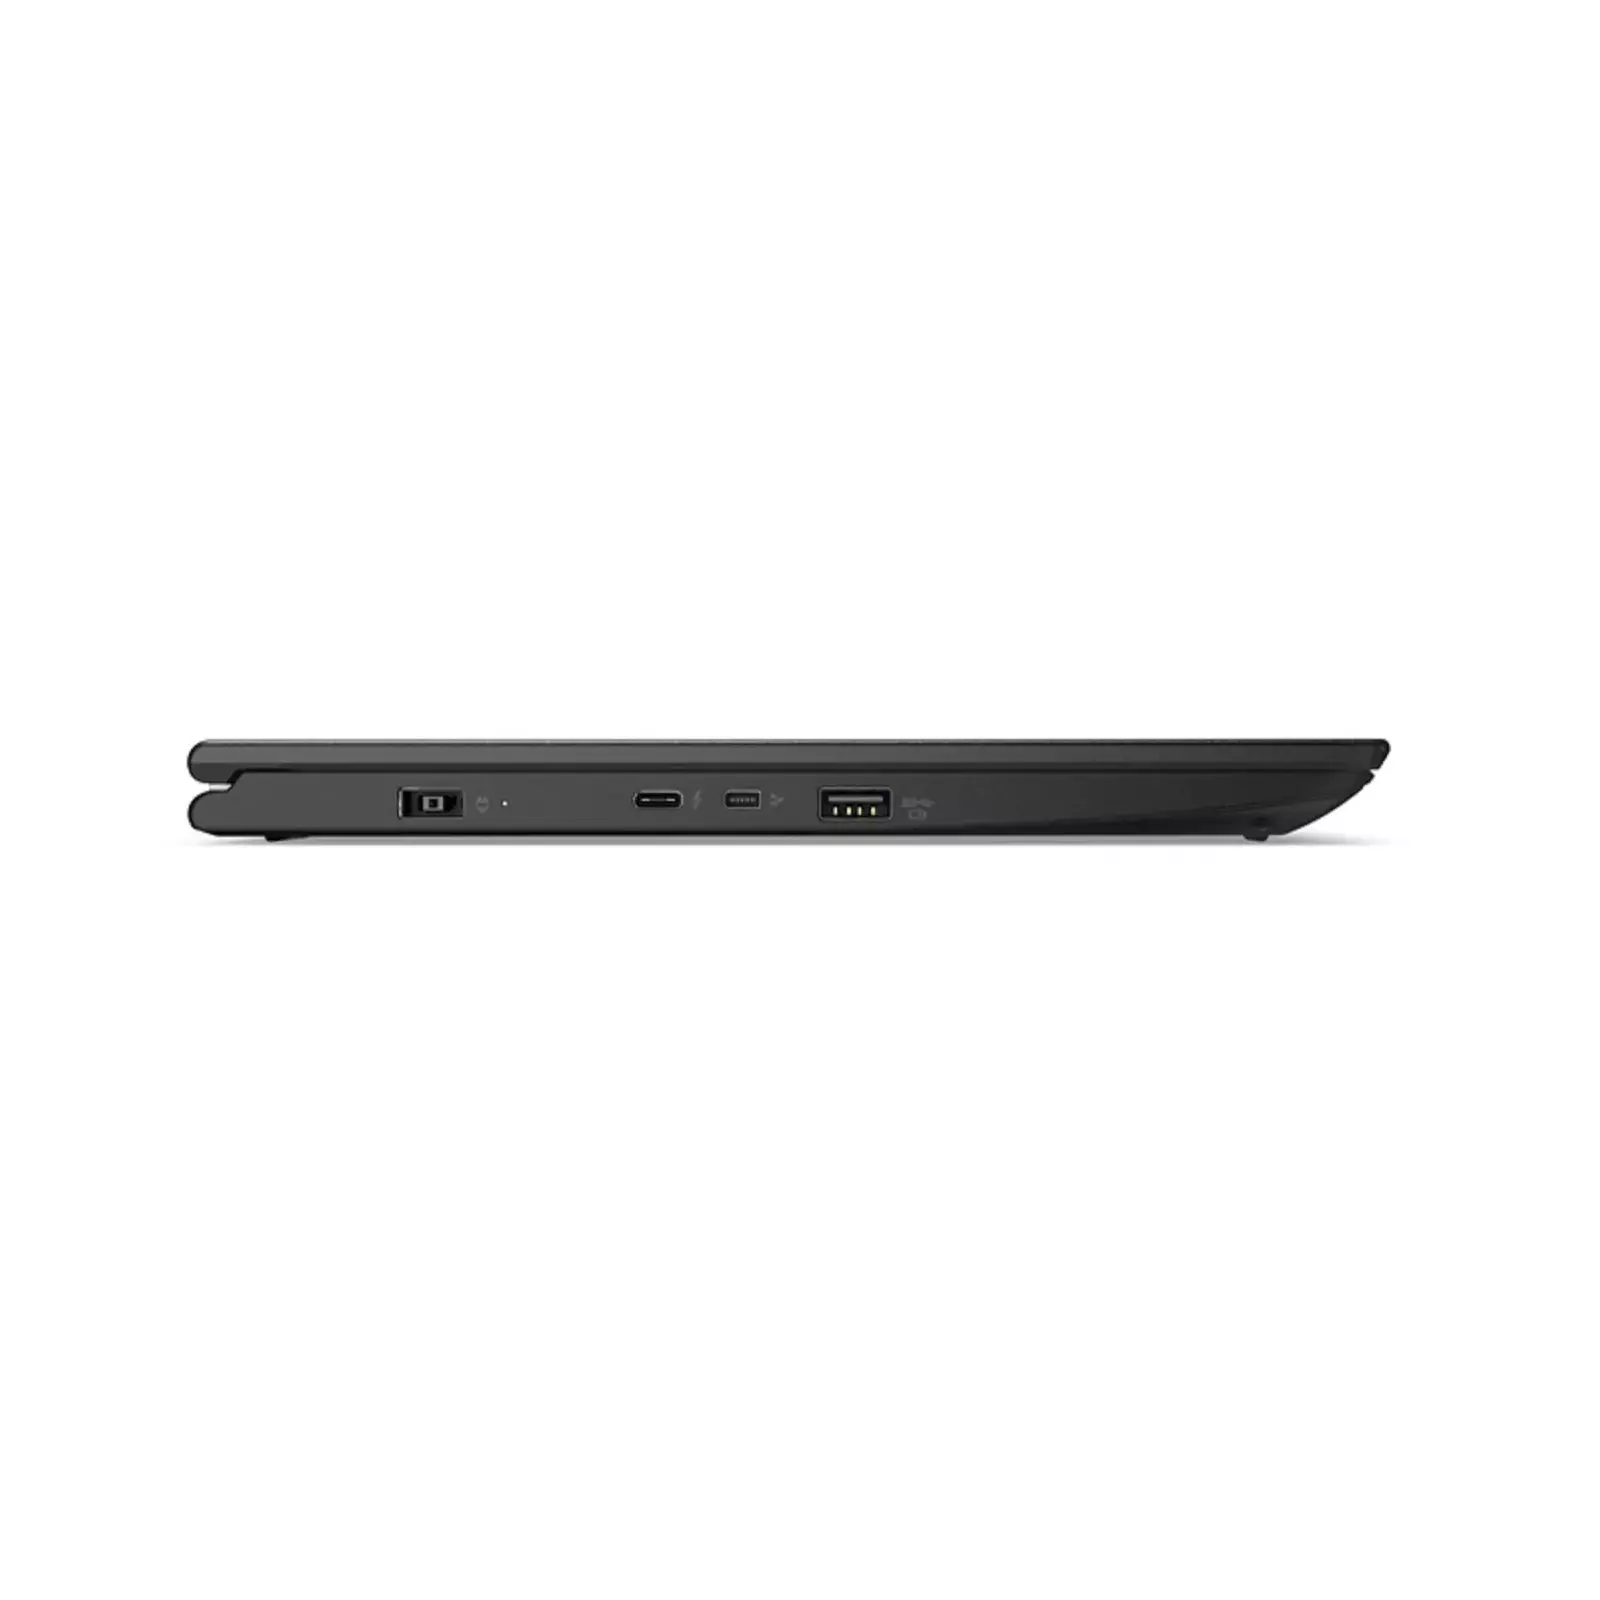 ThinkPad Yoga 370, Touchscreen 2-in-1 Laptop